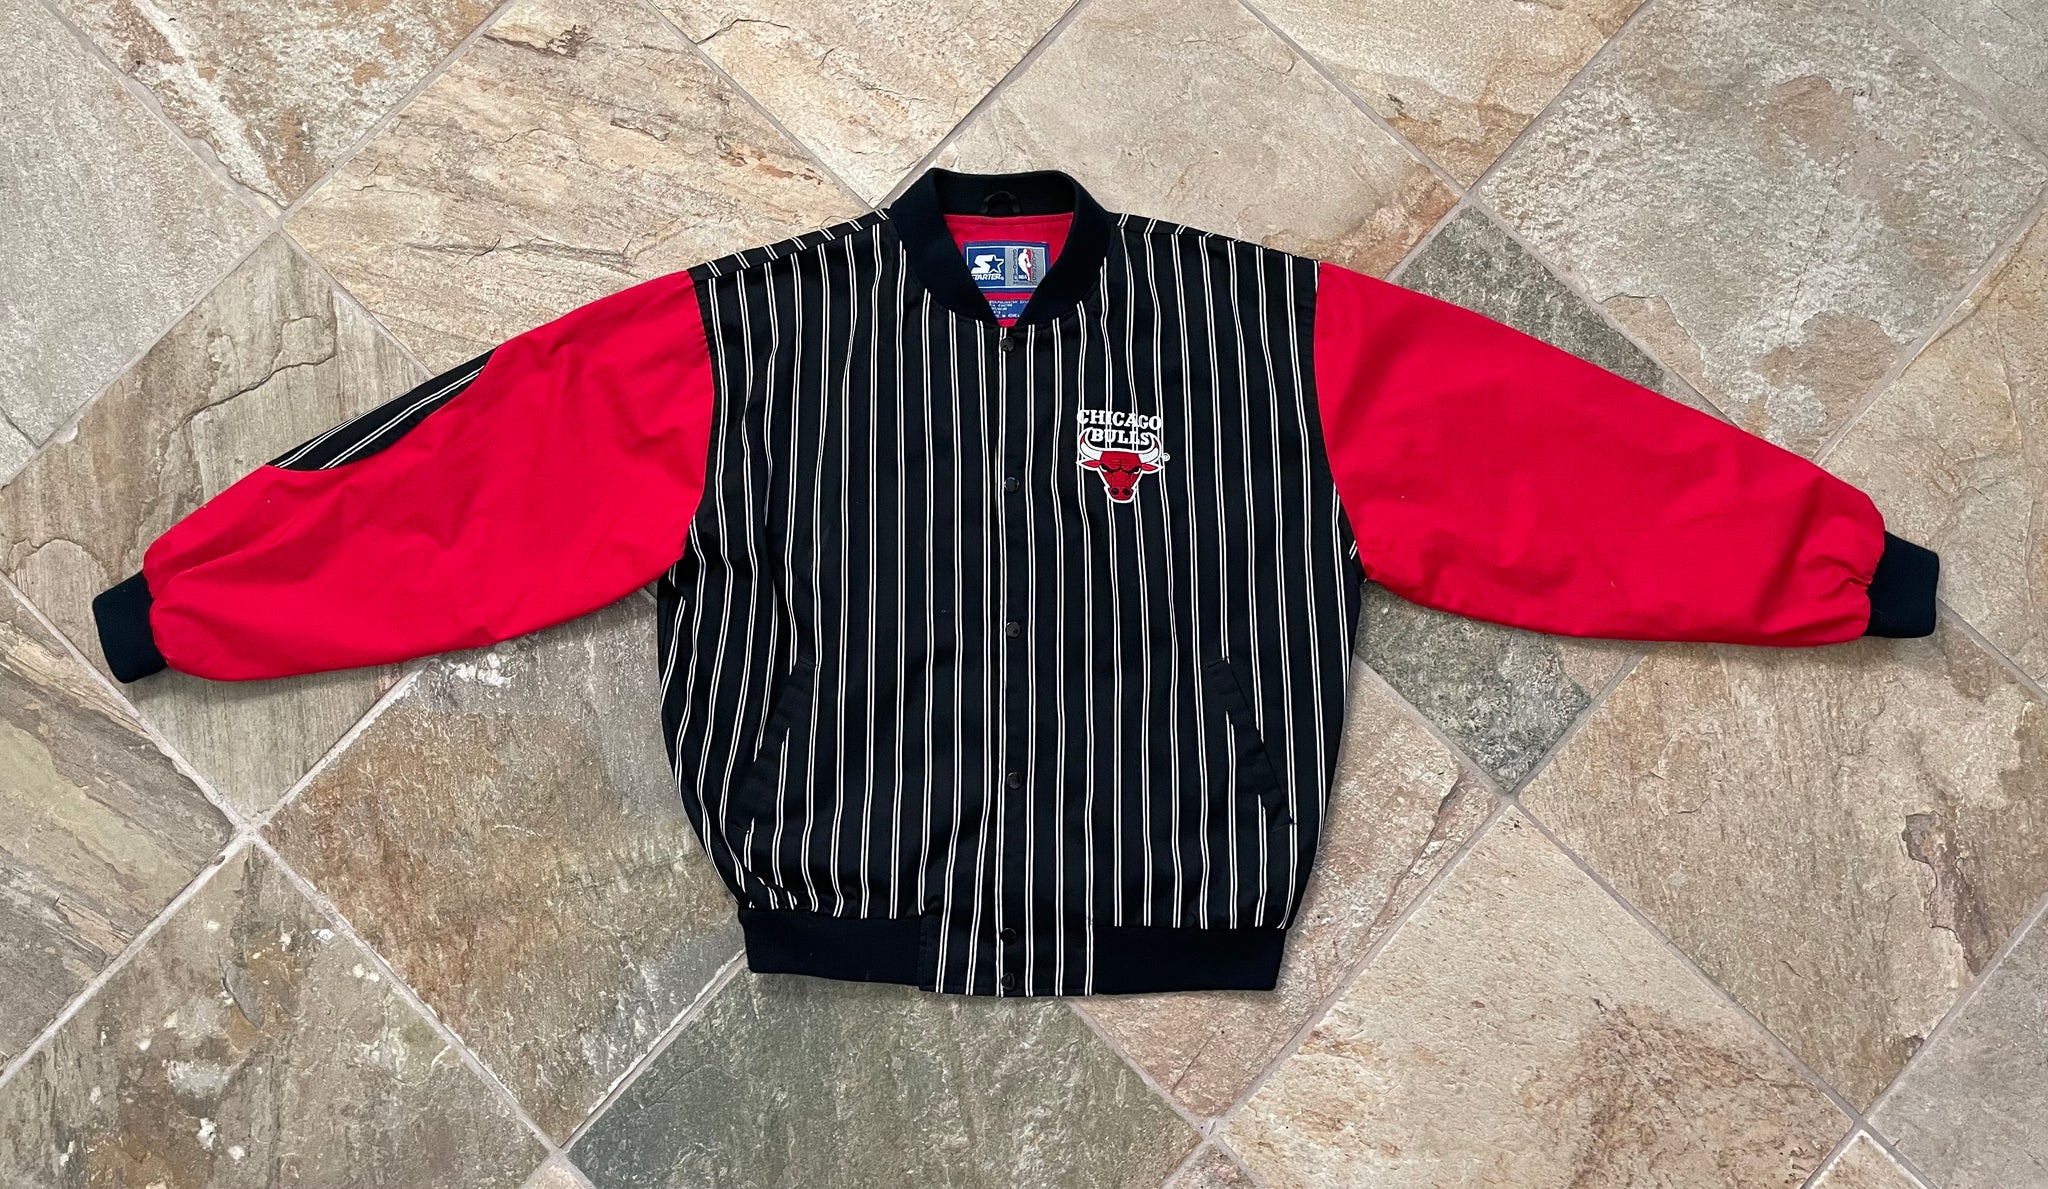 Vintage Starter Chicago Bulls Baseball Jersey XLarge / XXL